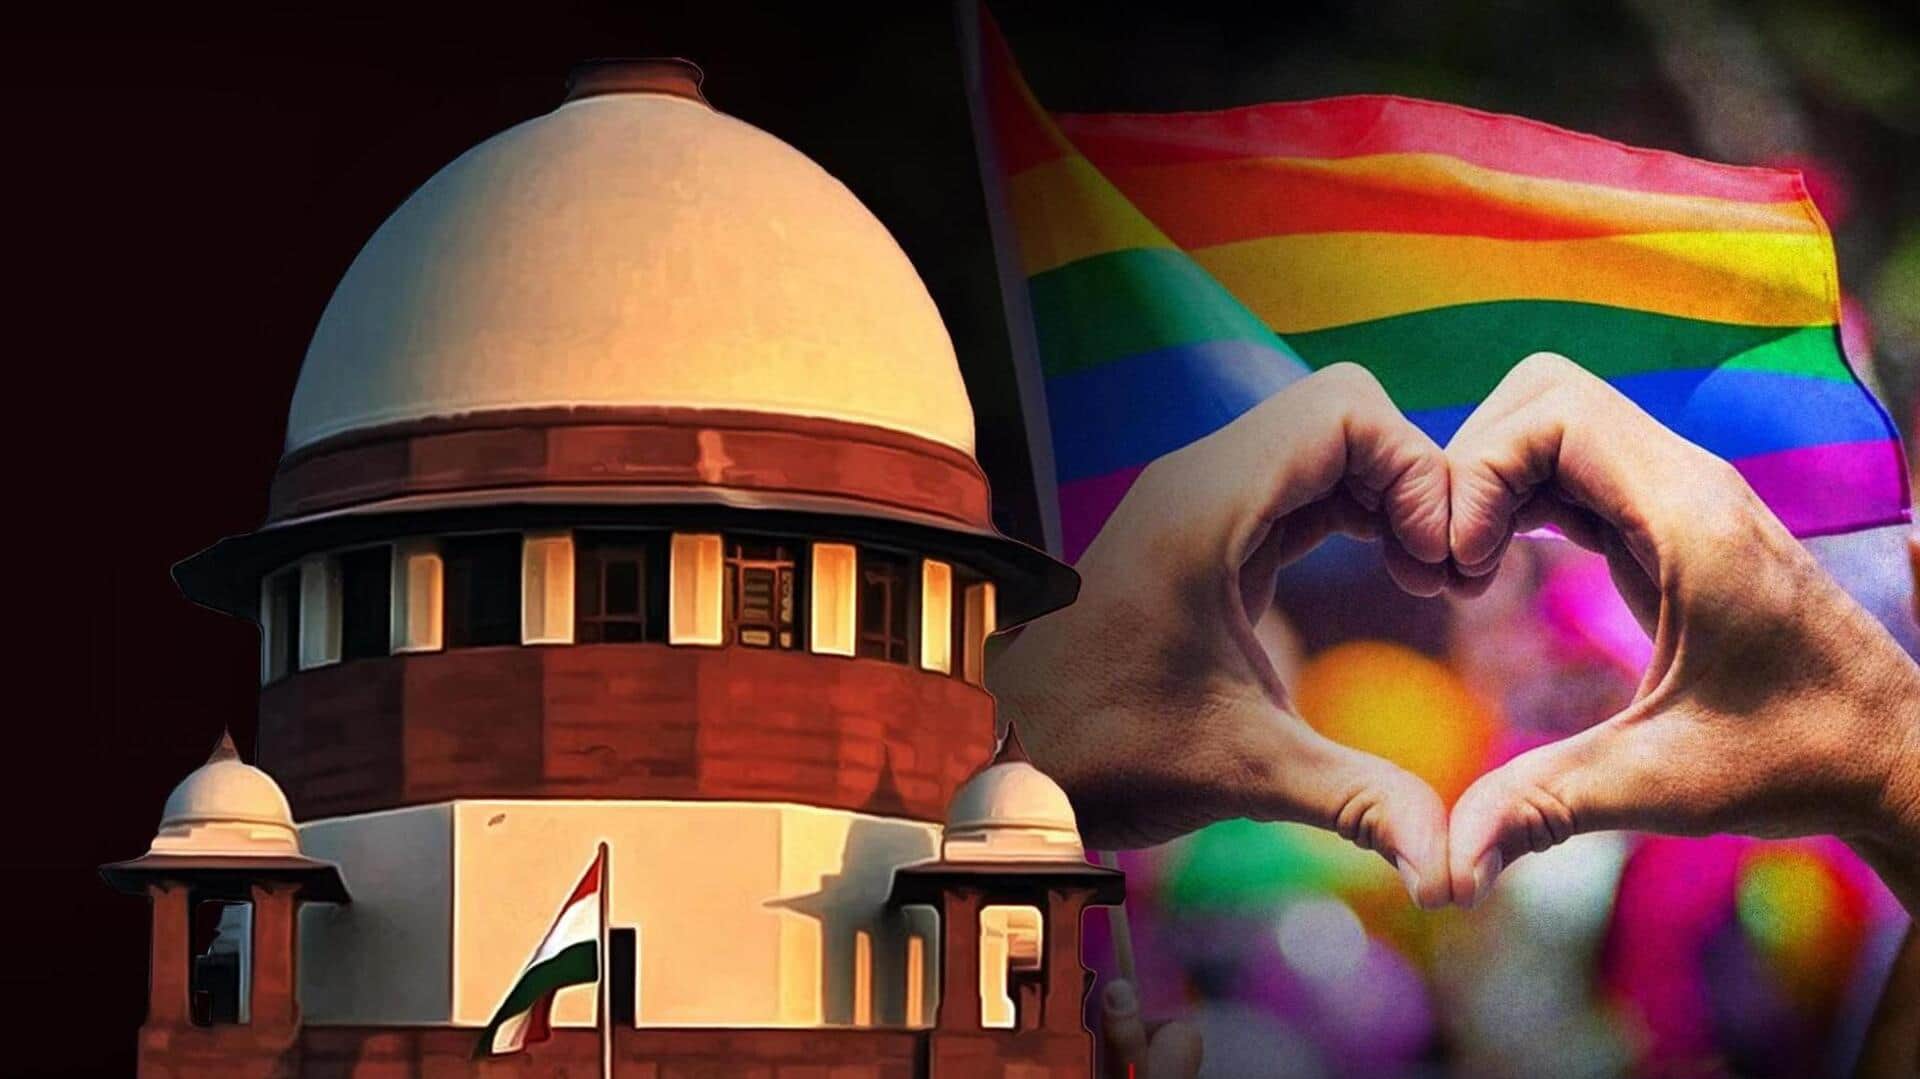 समलैंगिक विवाह पर सुप्रीम कोर्ट के फैसले के खिलाफ पुनर्विचार याचिका दाखिल, 28 नवंबर को सुनवाई